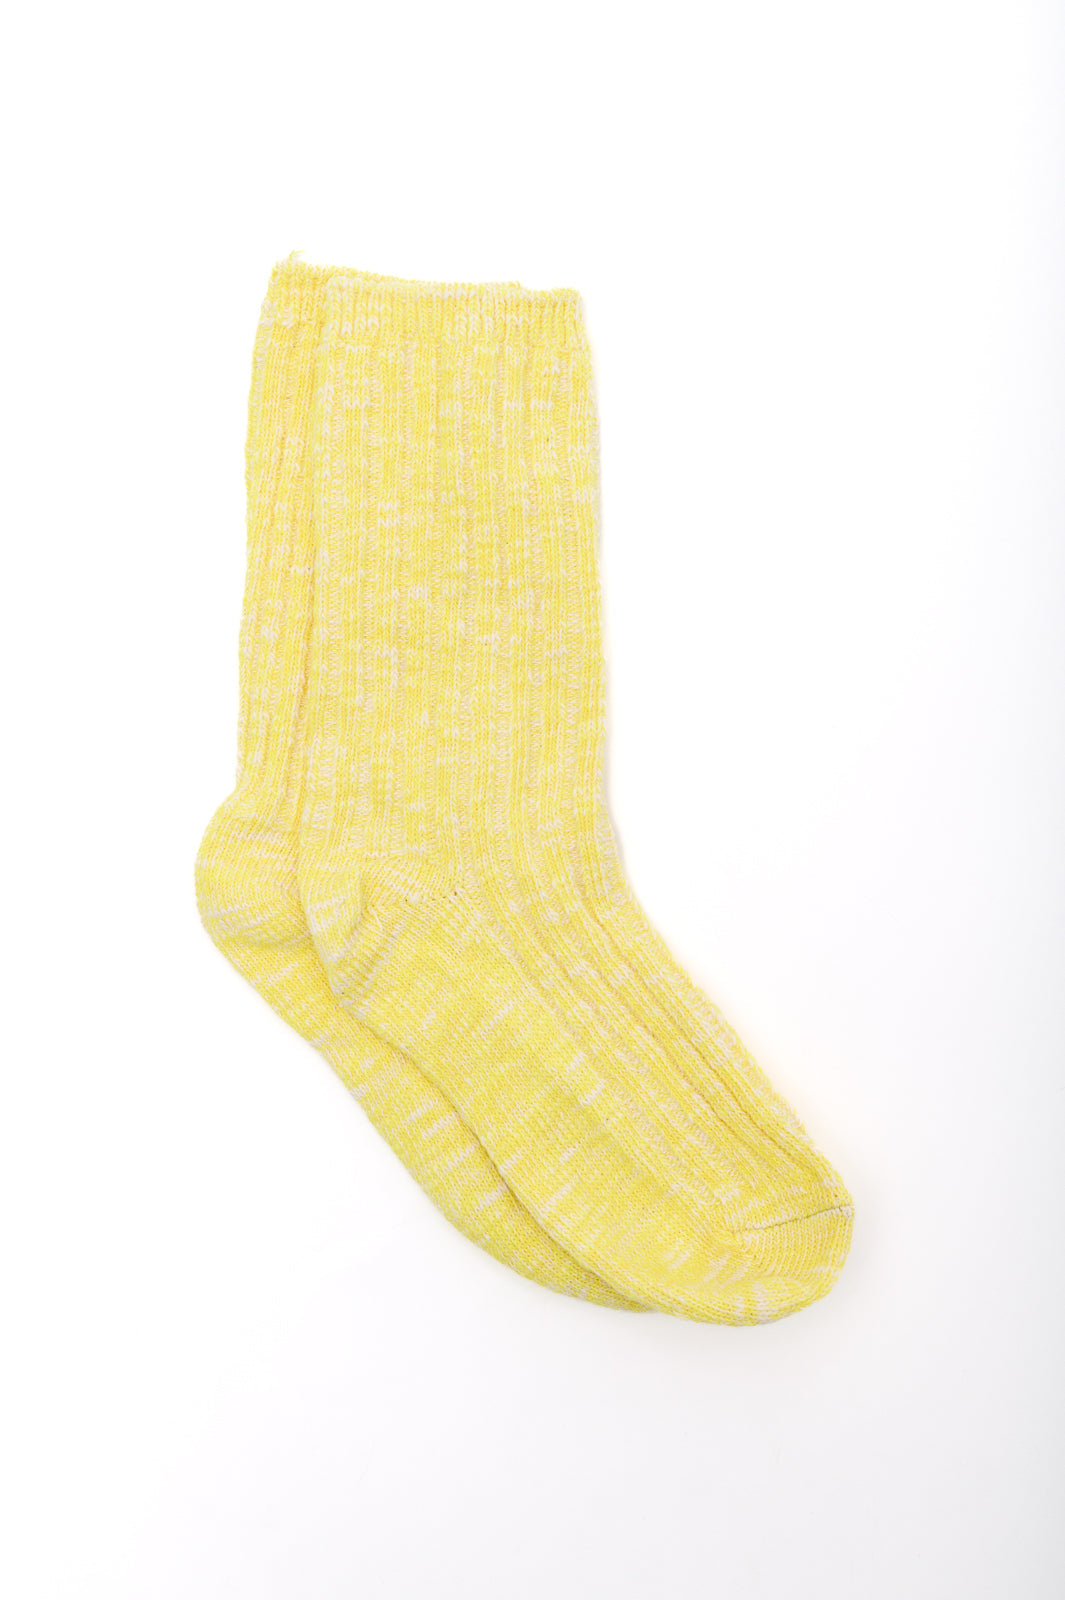 Sweet Socks Heathered Scrunch Socks - Atomic Wildflower